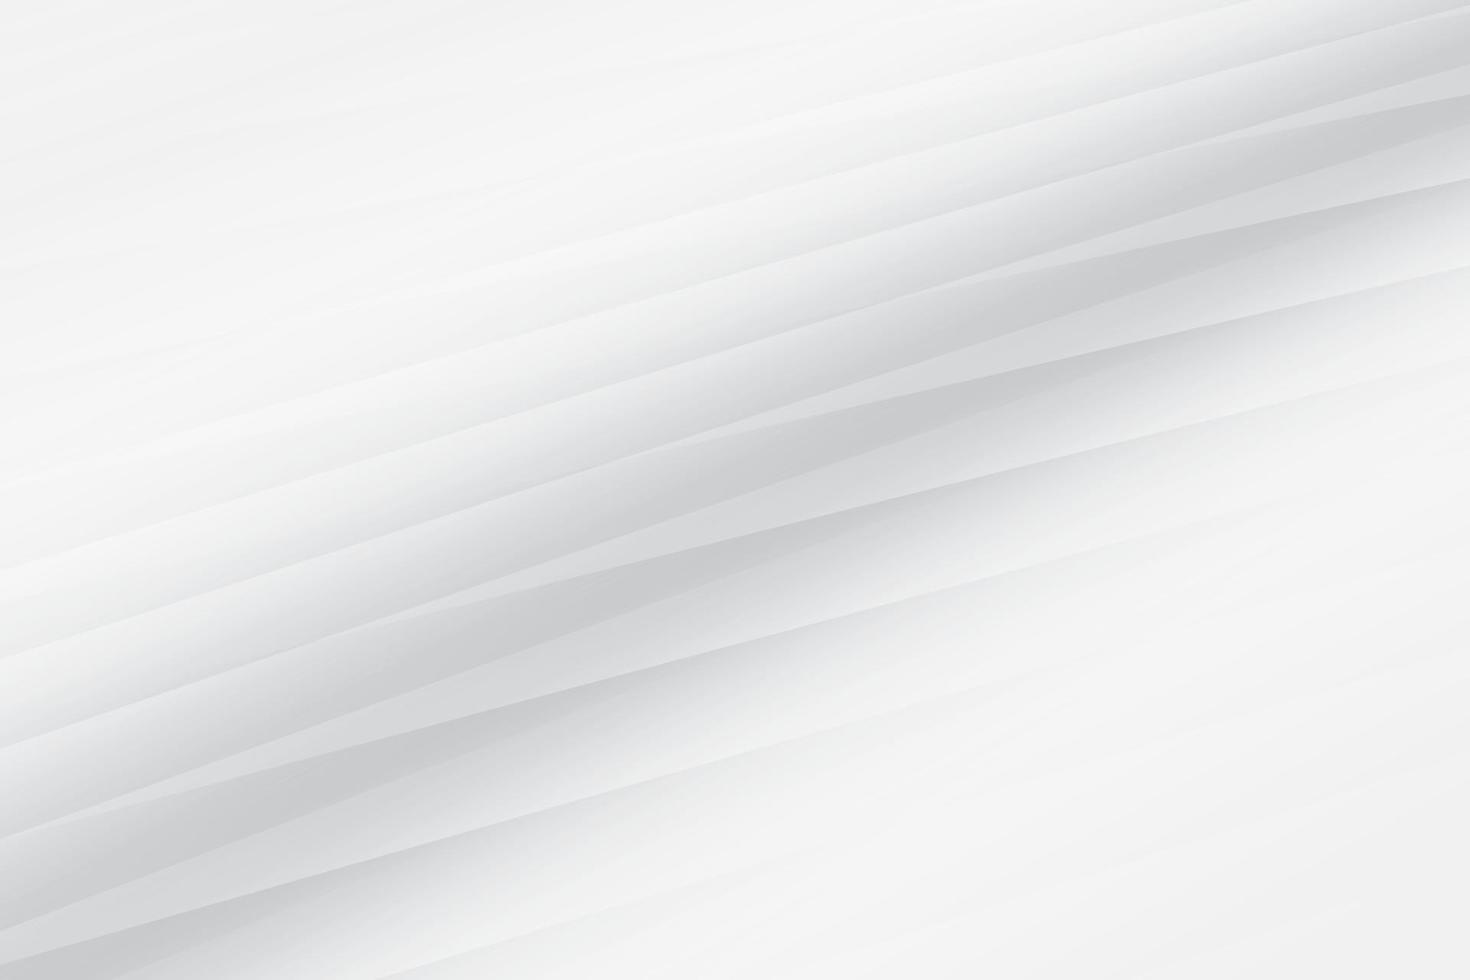 abstrato gradiente branco e cinza com forma geométrica. ilustração vetorial. vetor